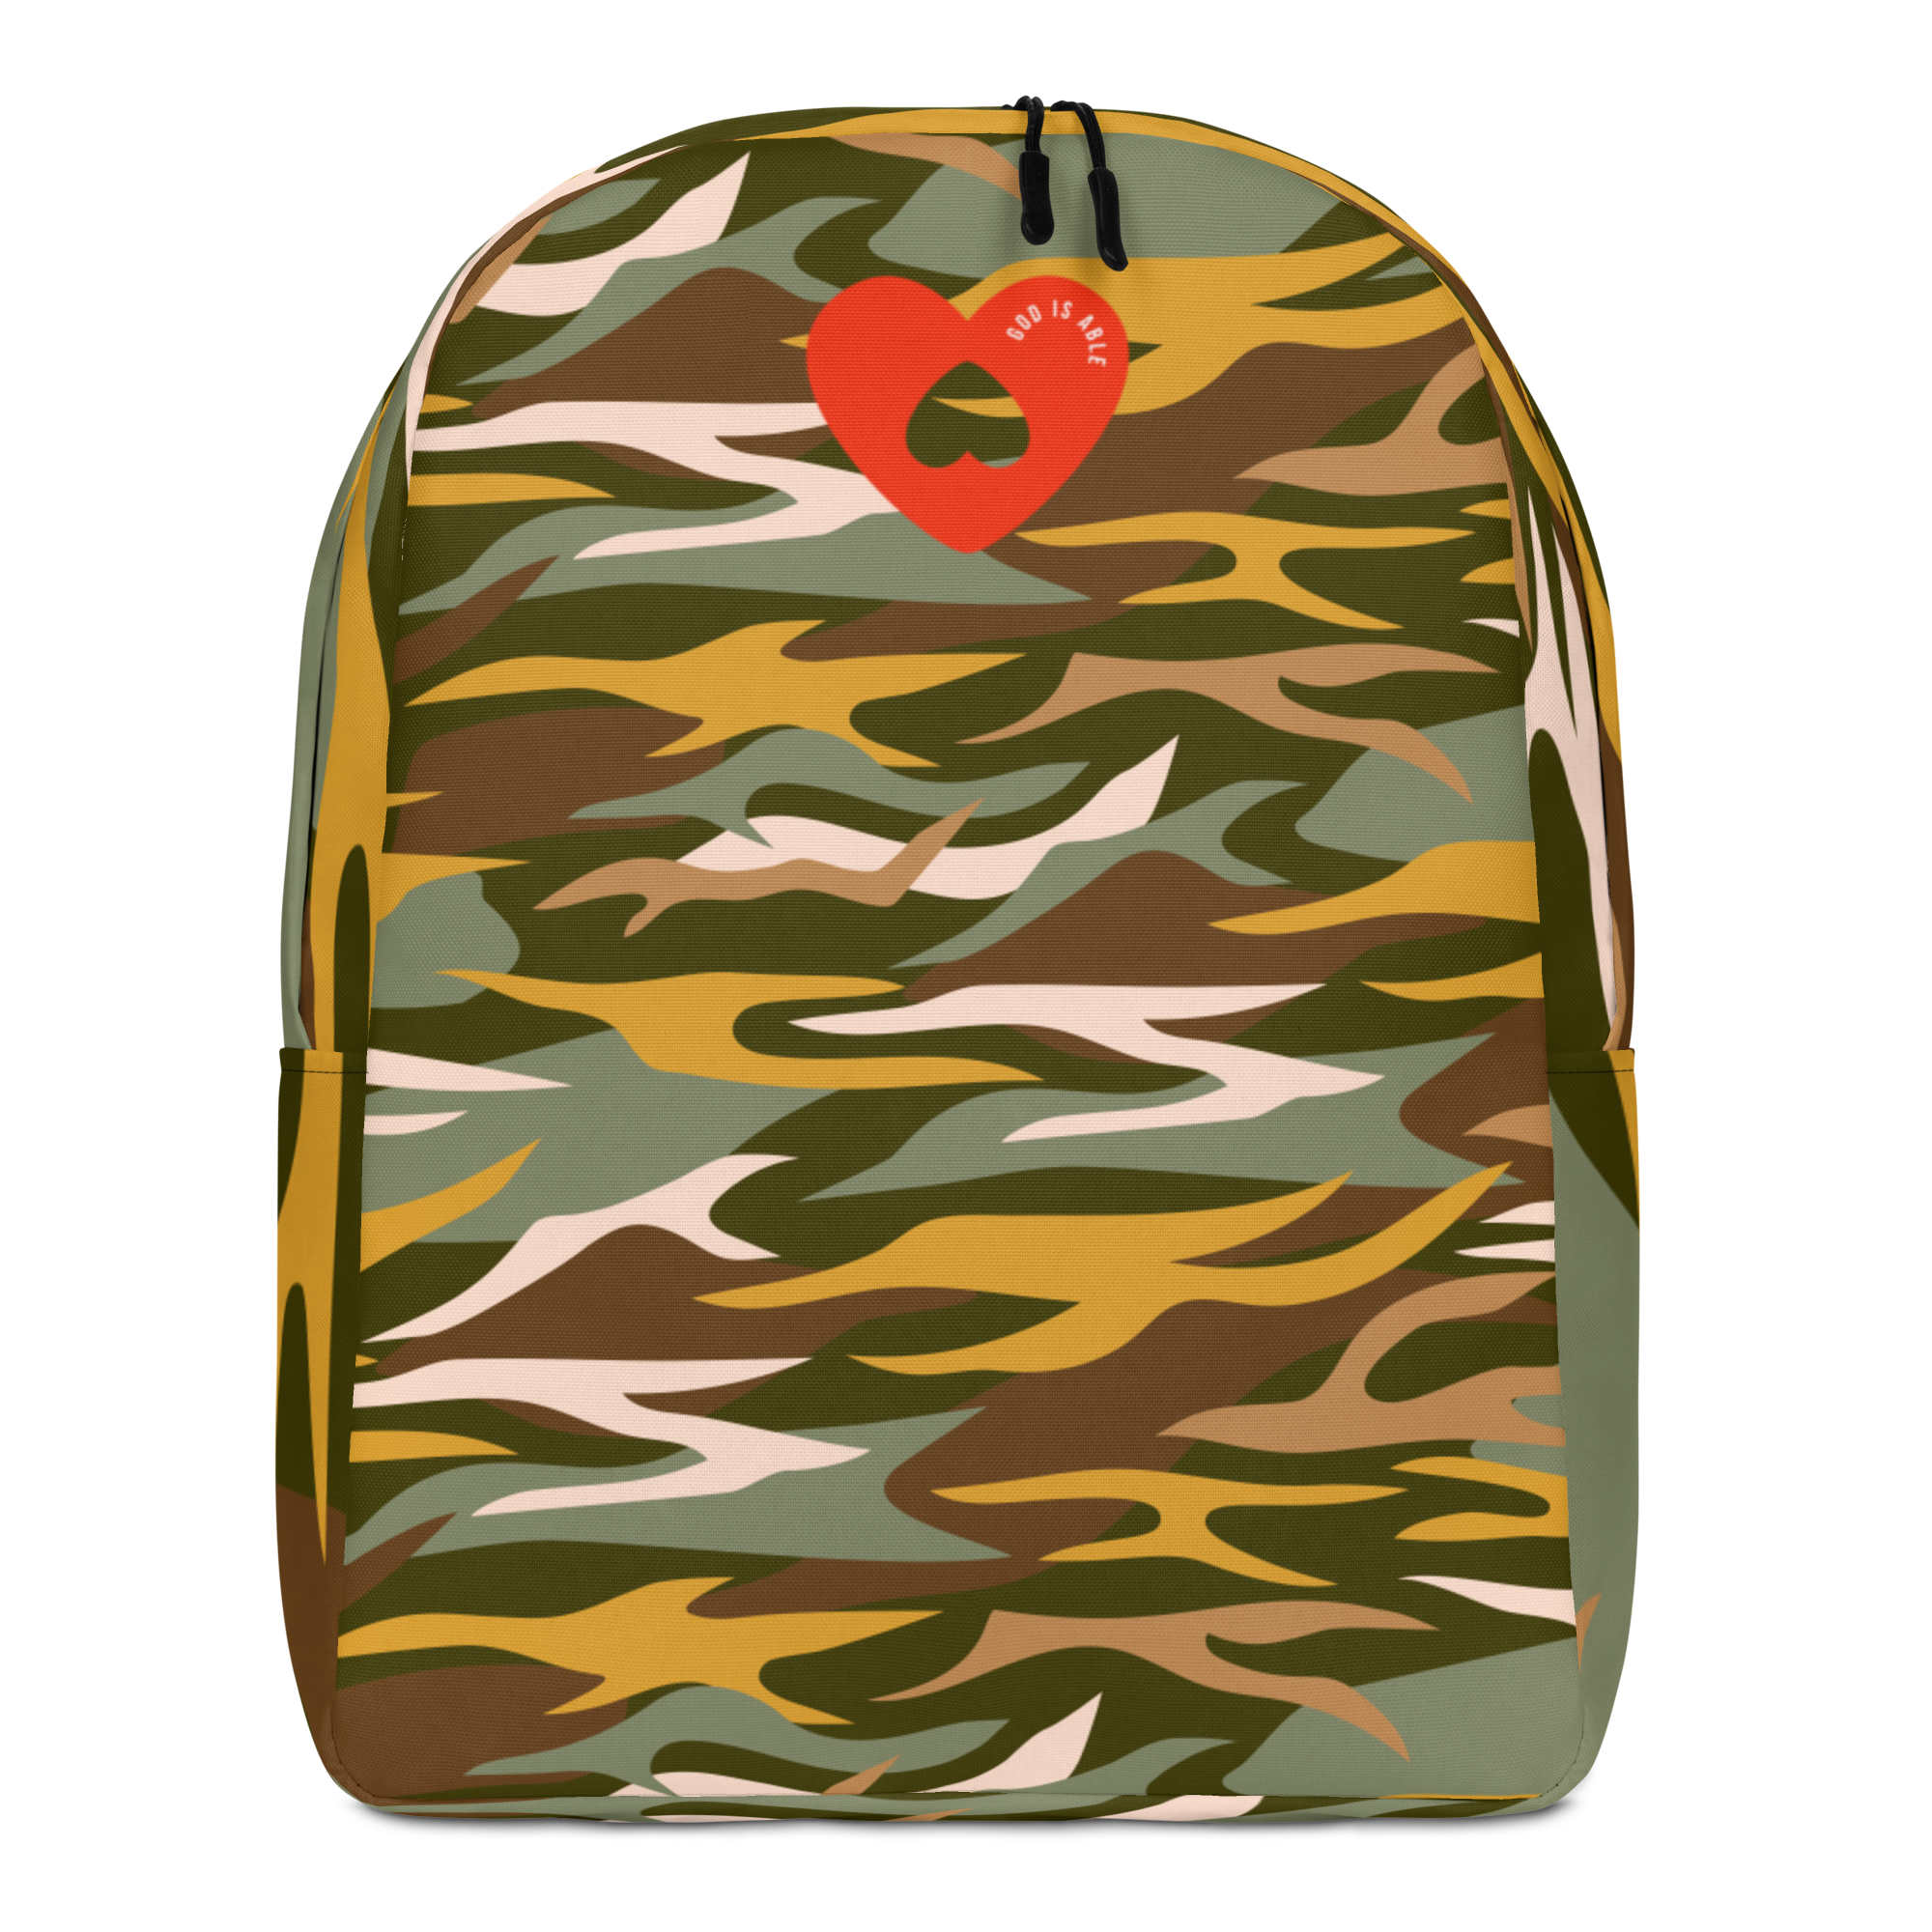 God's Heart Backpack (Combat)